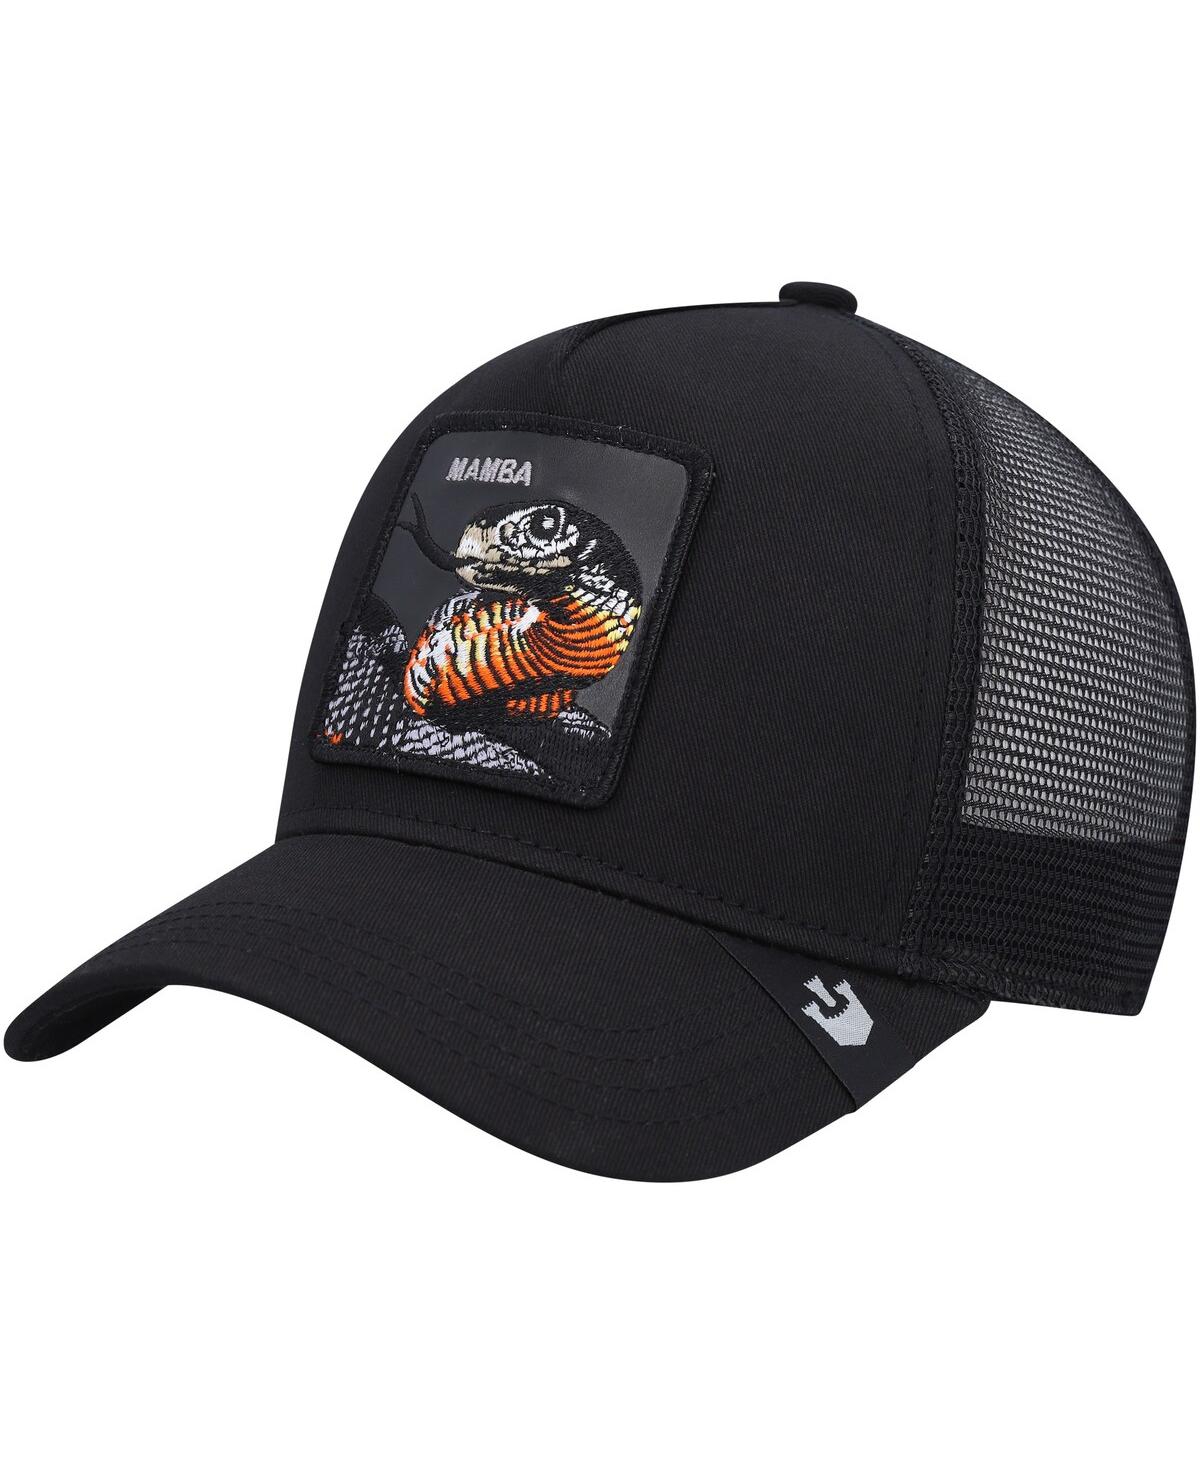 Shop Goorin Bros Men's . Black Mamba Adjustable Trucker Hat